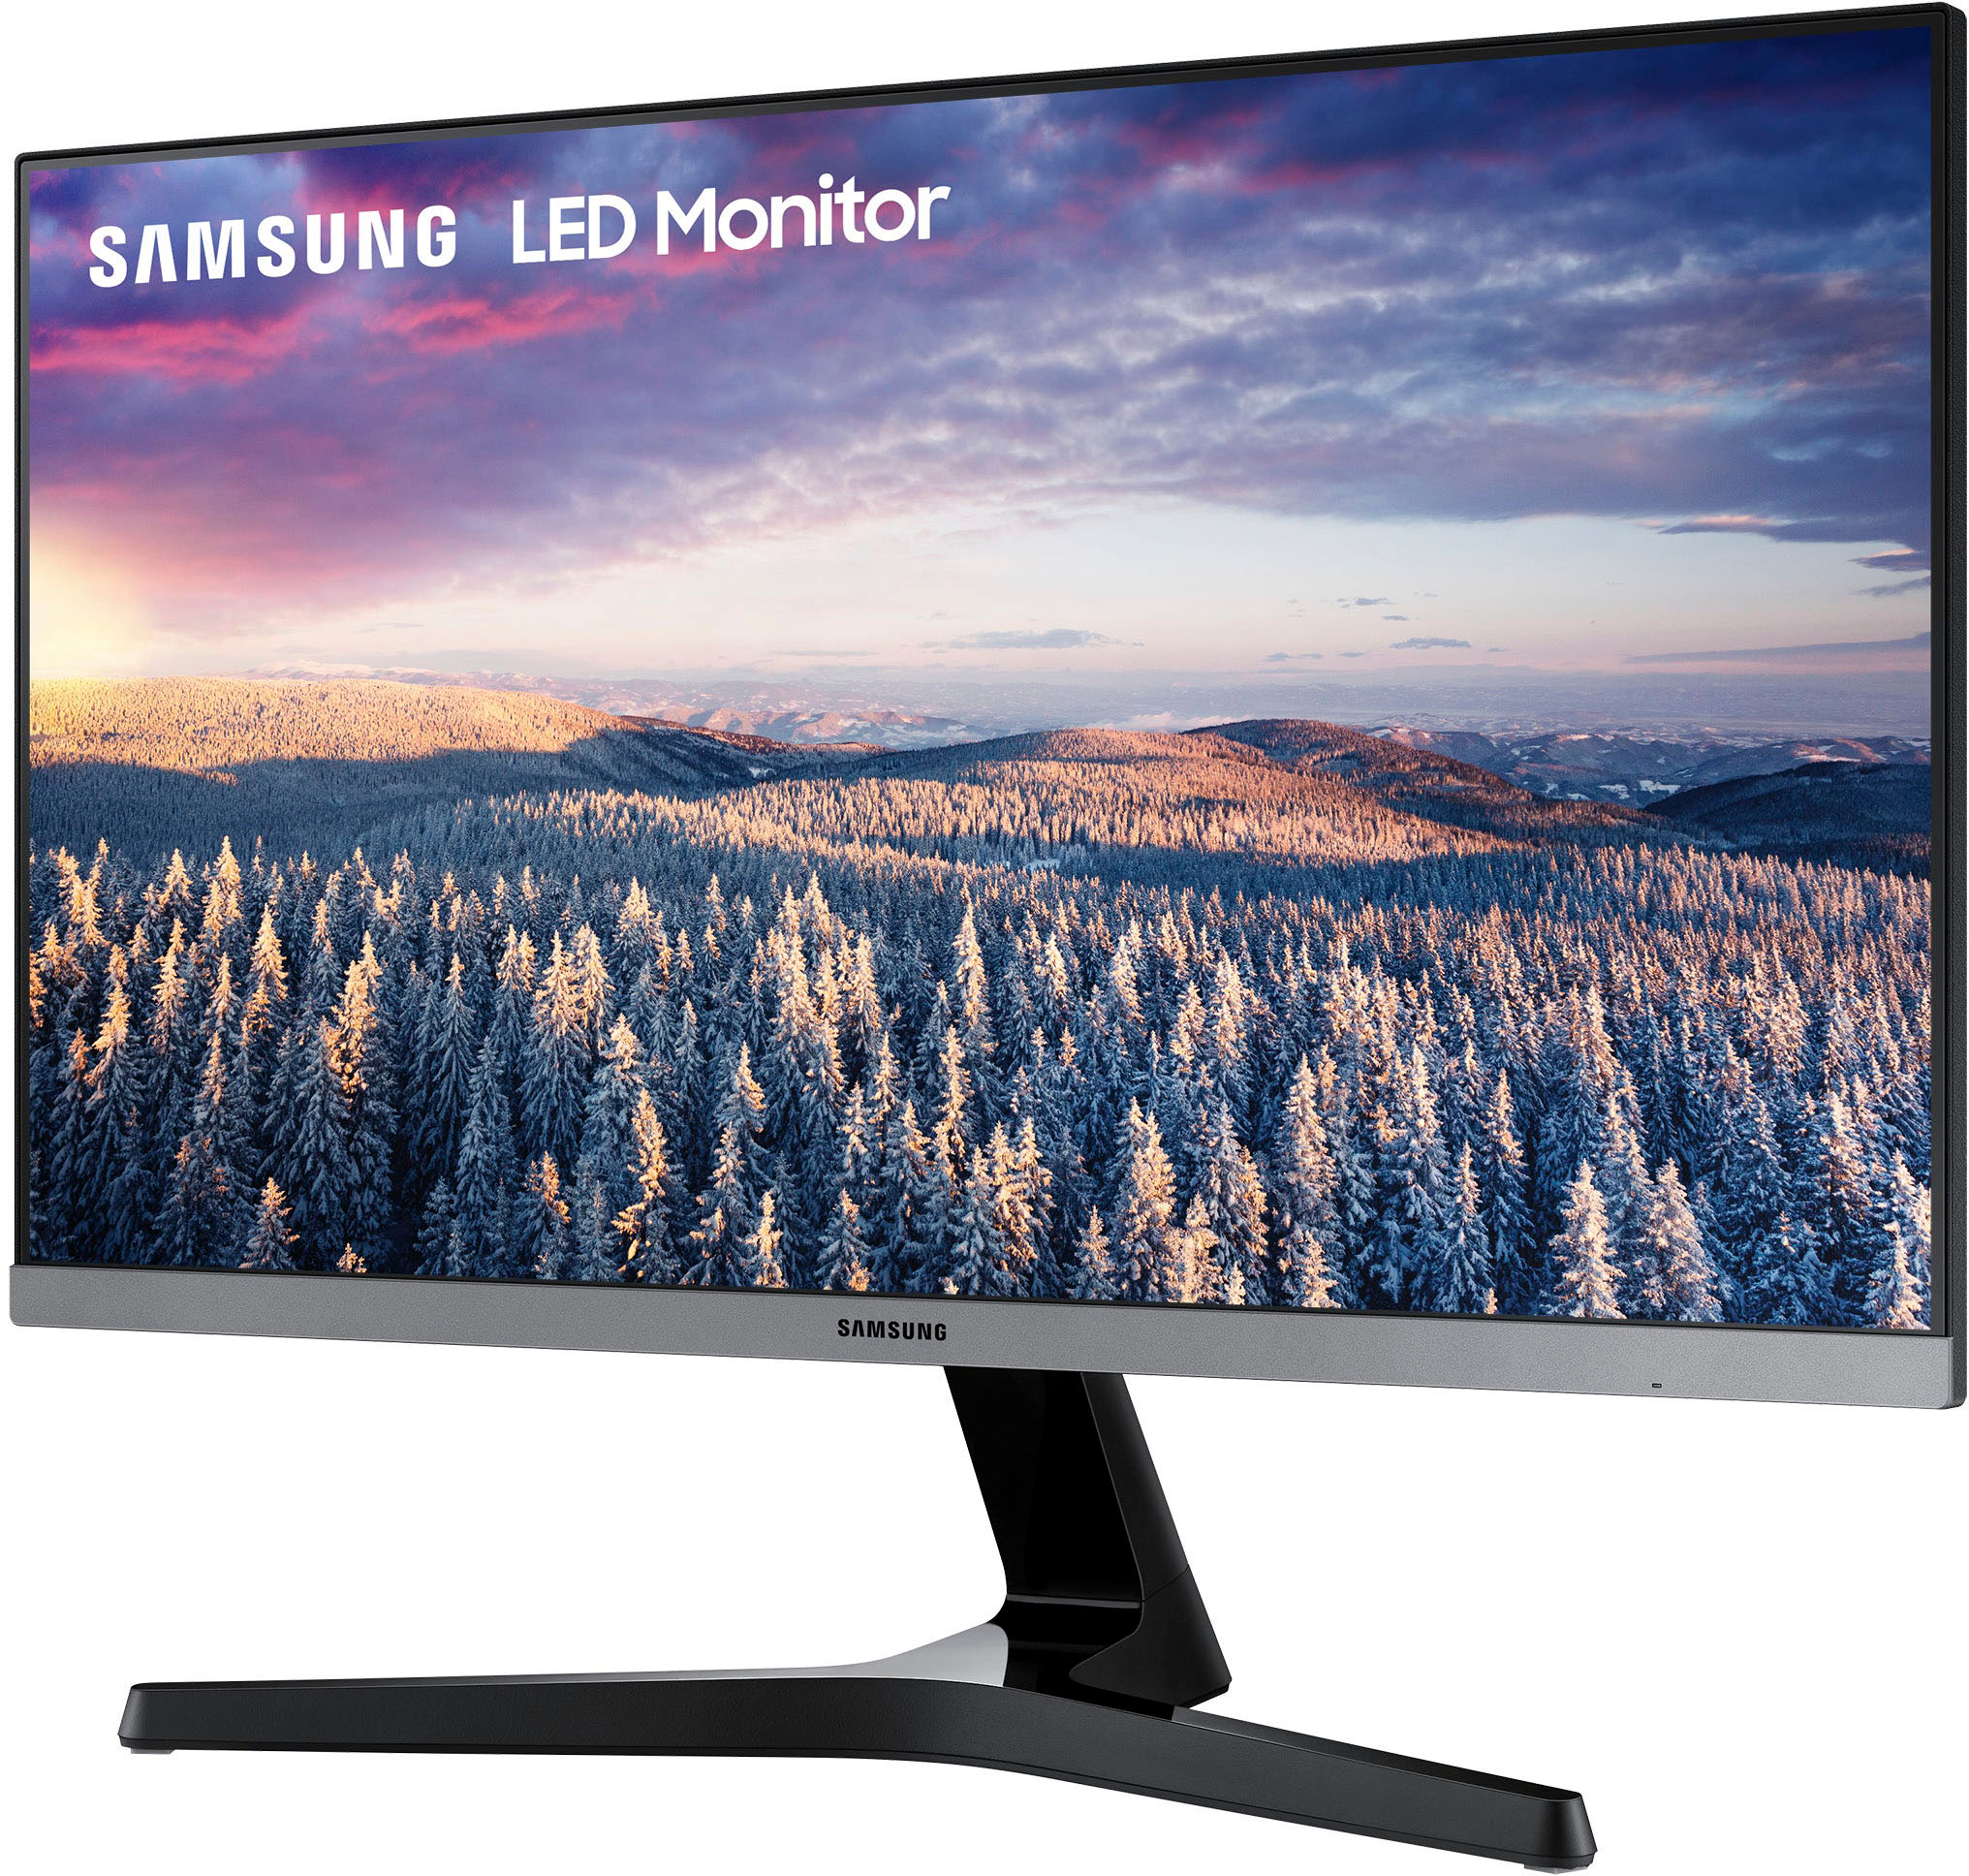 Samsung 24" LED FHD AMD FreeSync Monitor with bezel-less design Black LS24R35AFHNXZA Best